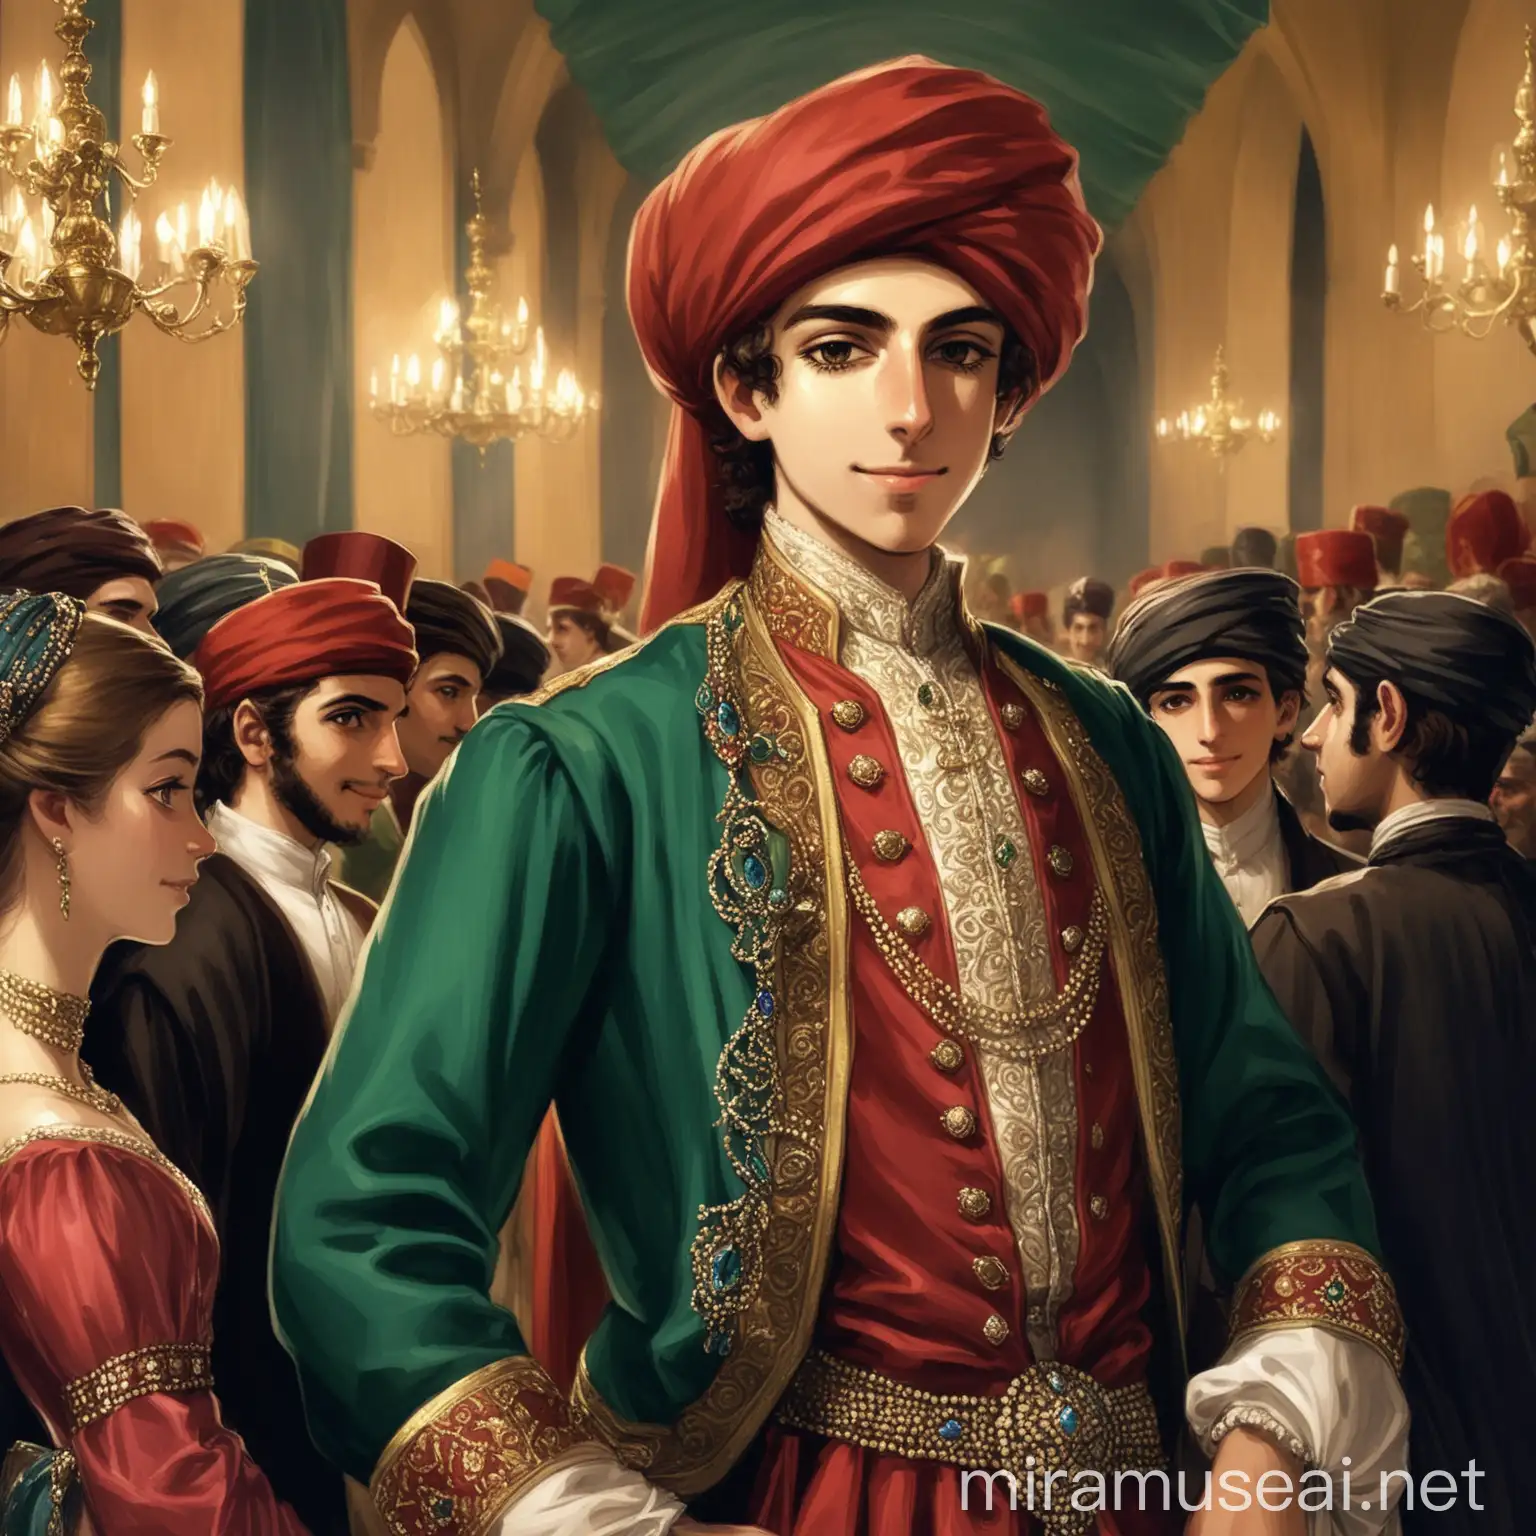 Elegant Ottoman Merchant Attending English Ball